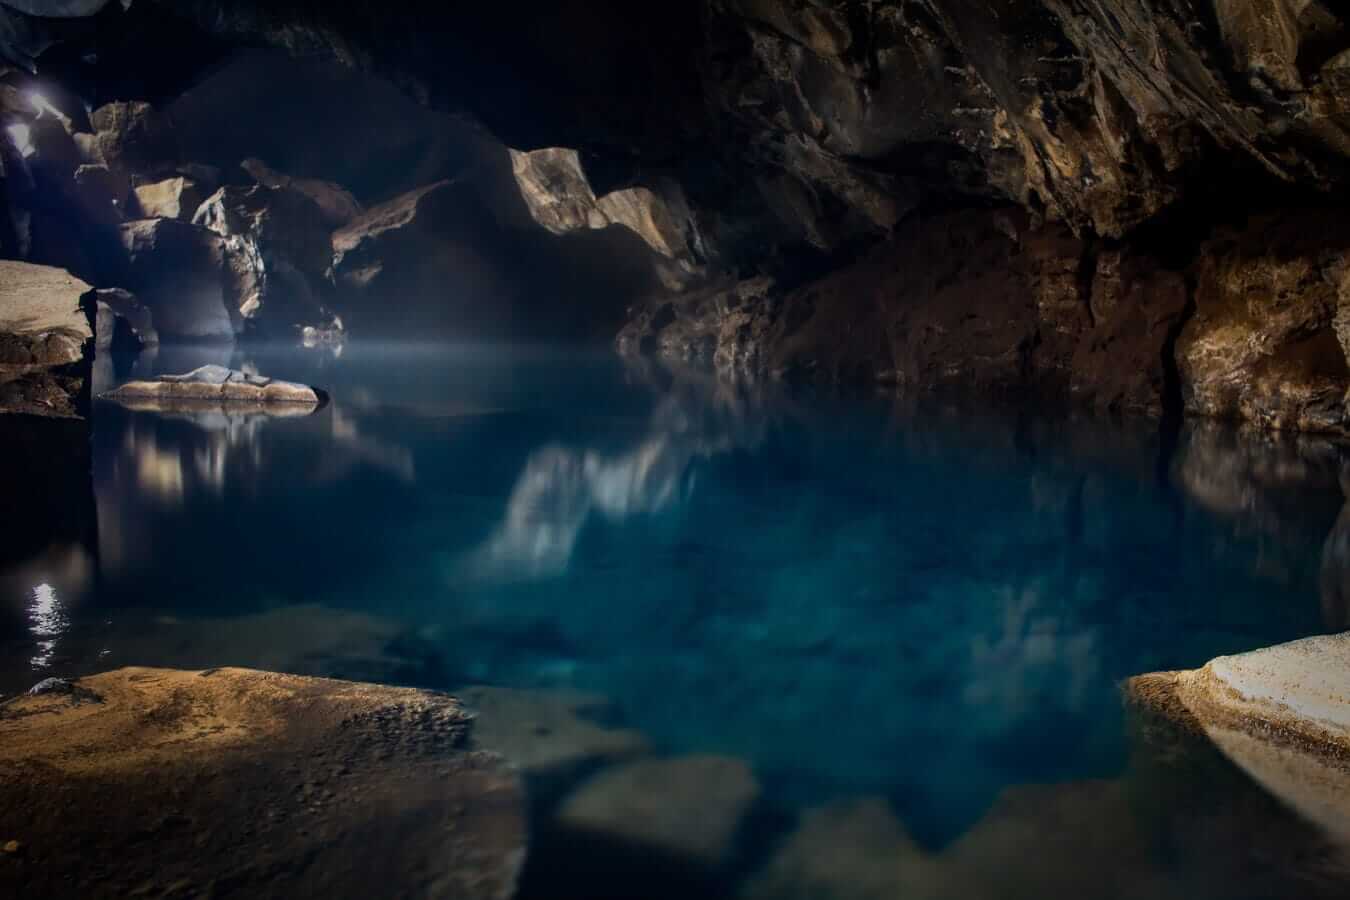 Game of Thrones Locations - Grjótagjá Cave, Iceland